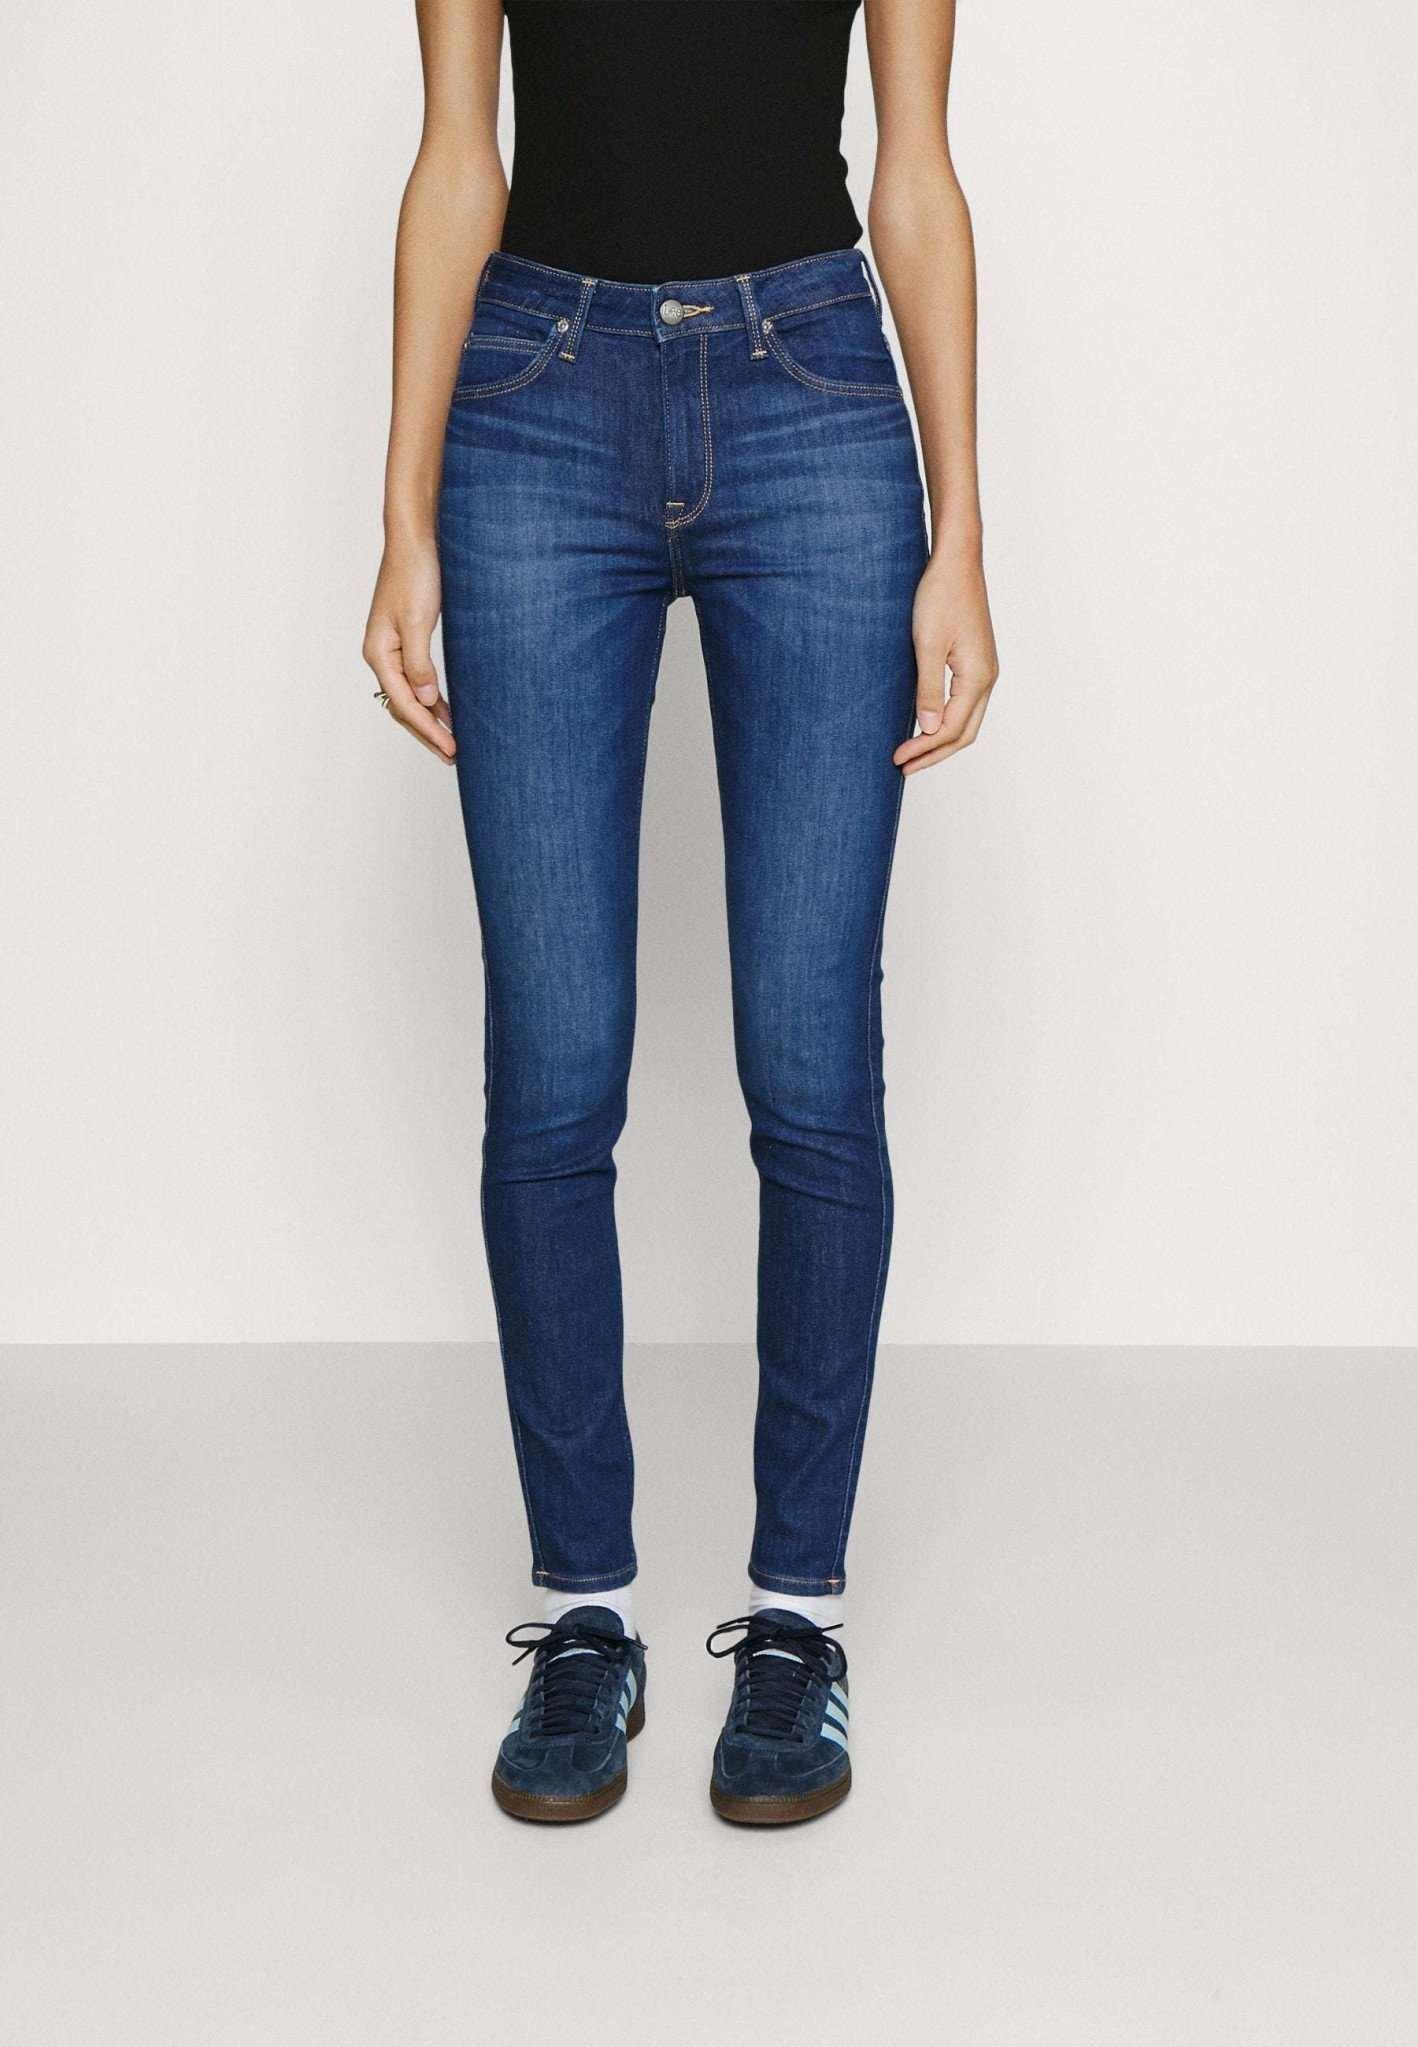 Jeans Skinny Fit Scarlett High Damen Blau L33/W28 von Lee